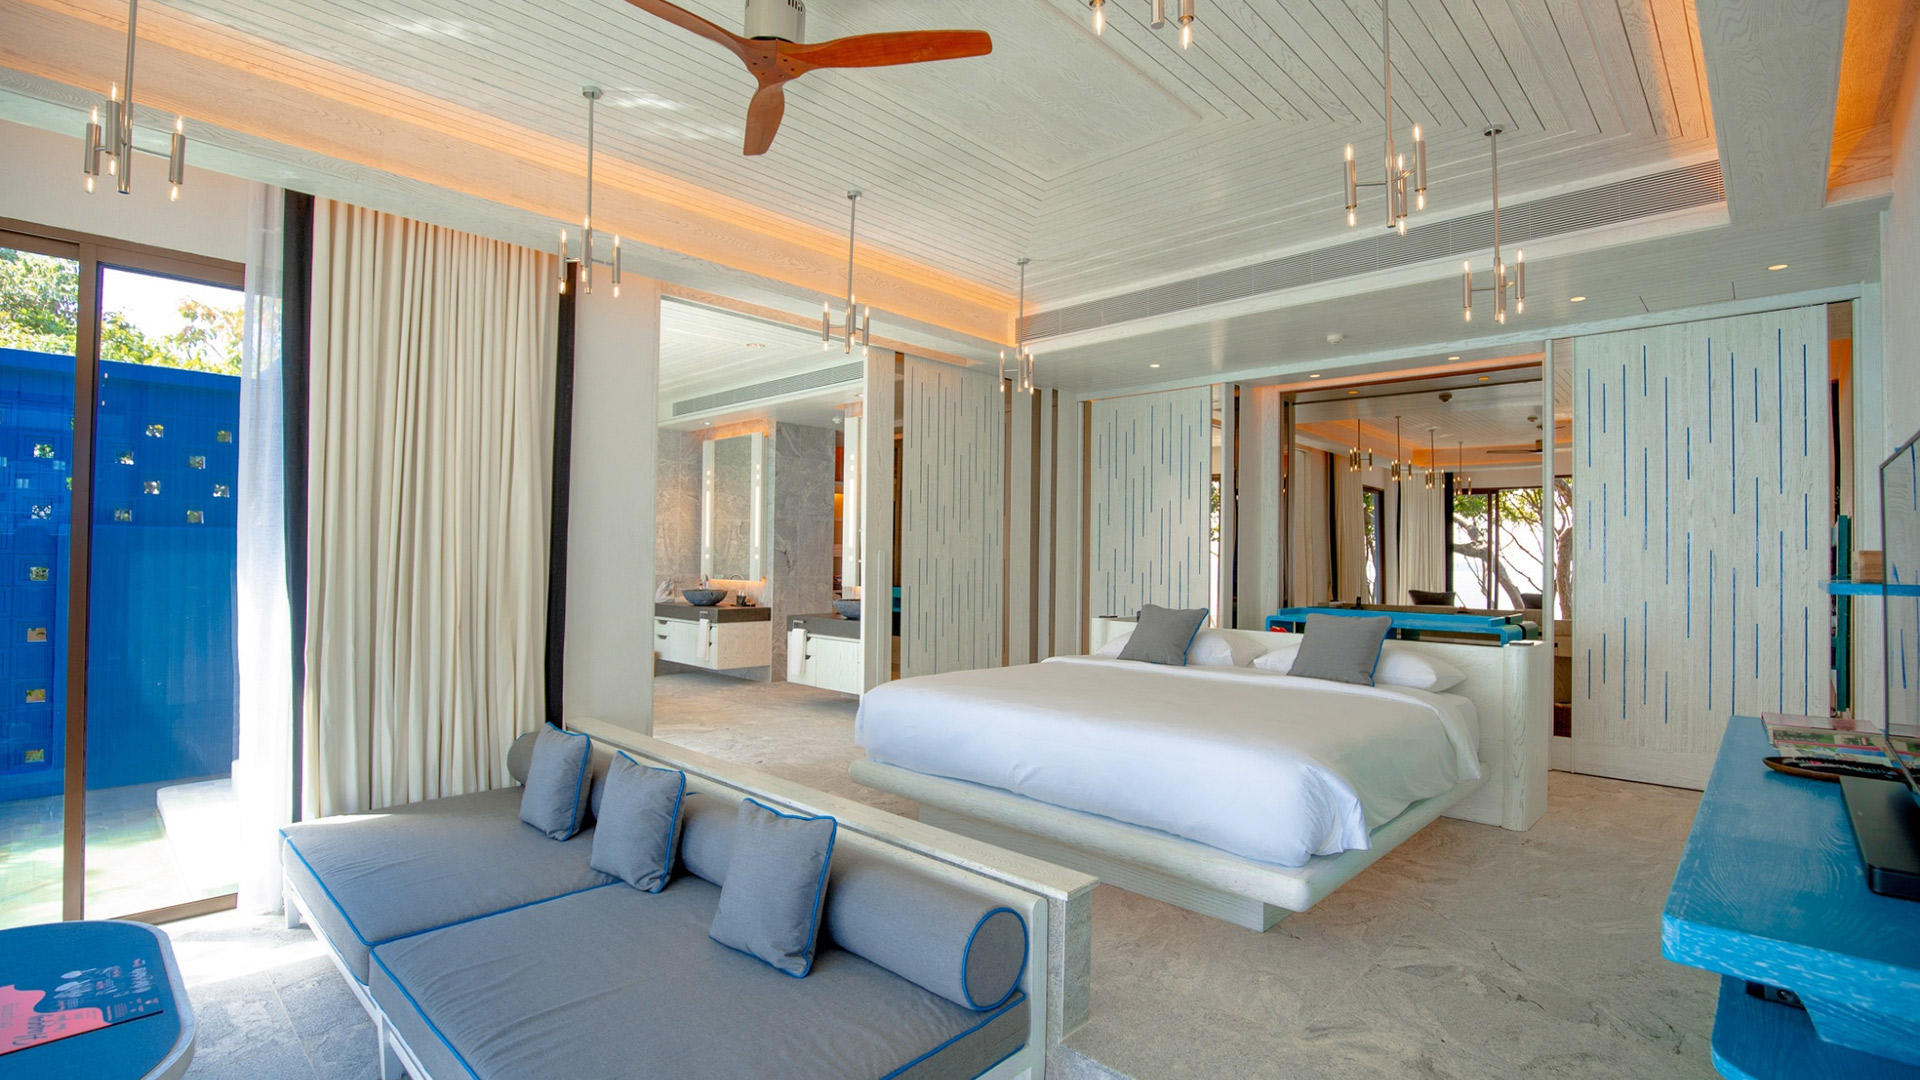 4br luxury residential hotel private luxury pool villa hotel bedroom